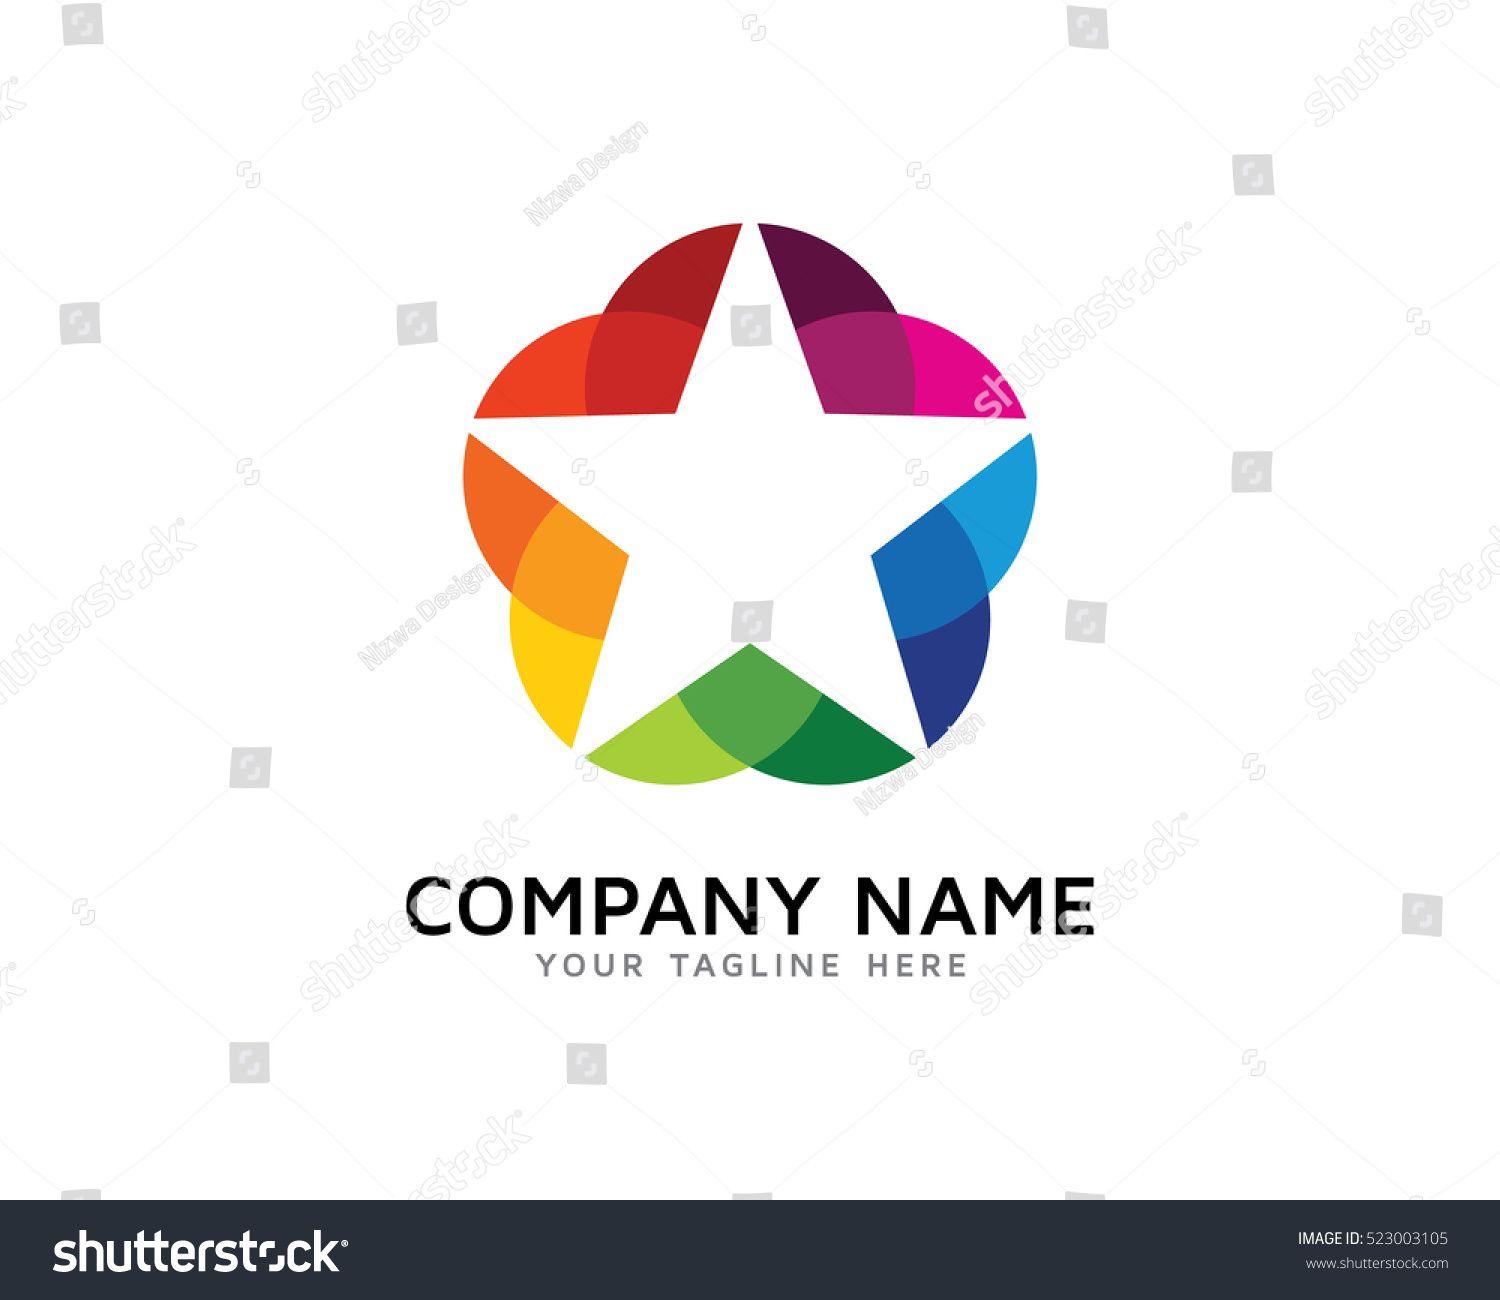 Unique Star Logo - Colorful Circle Star Logo Design Template. Star Logos